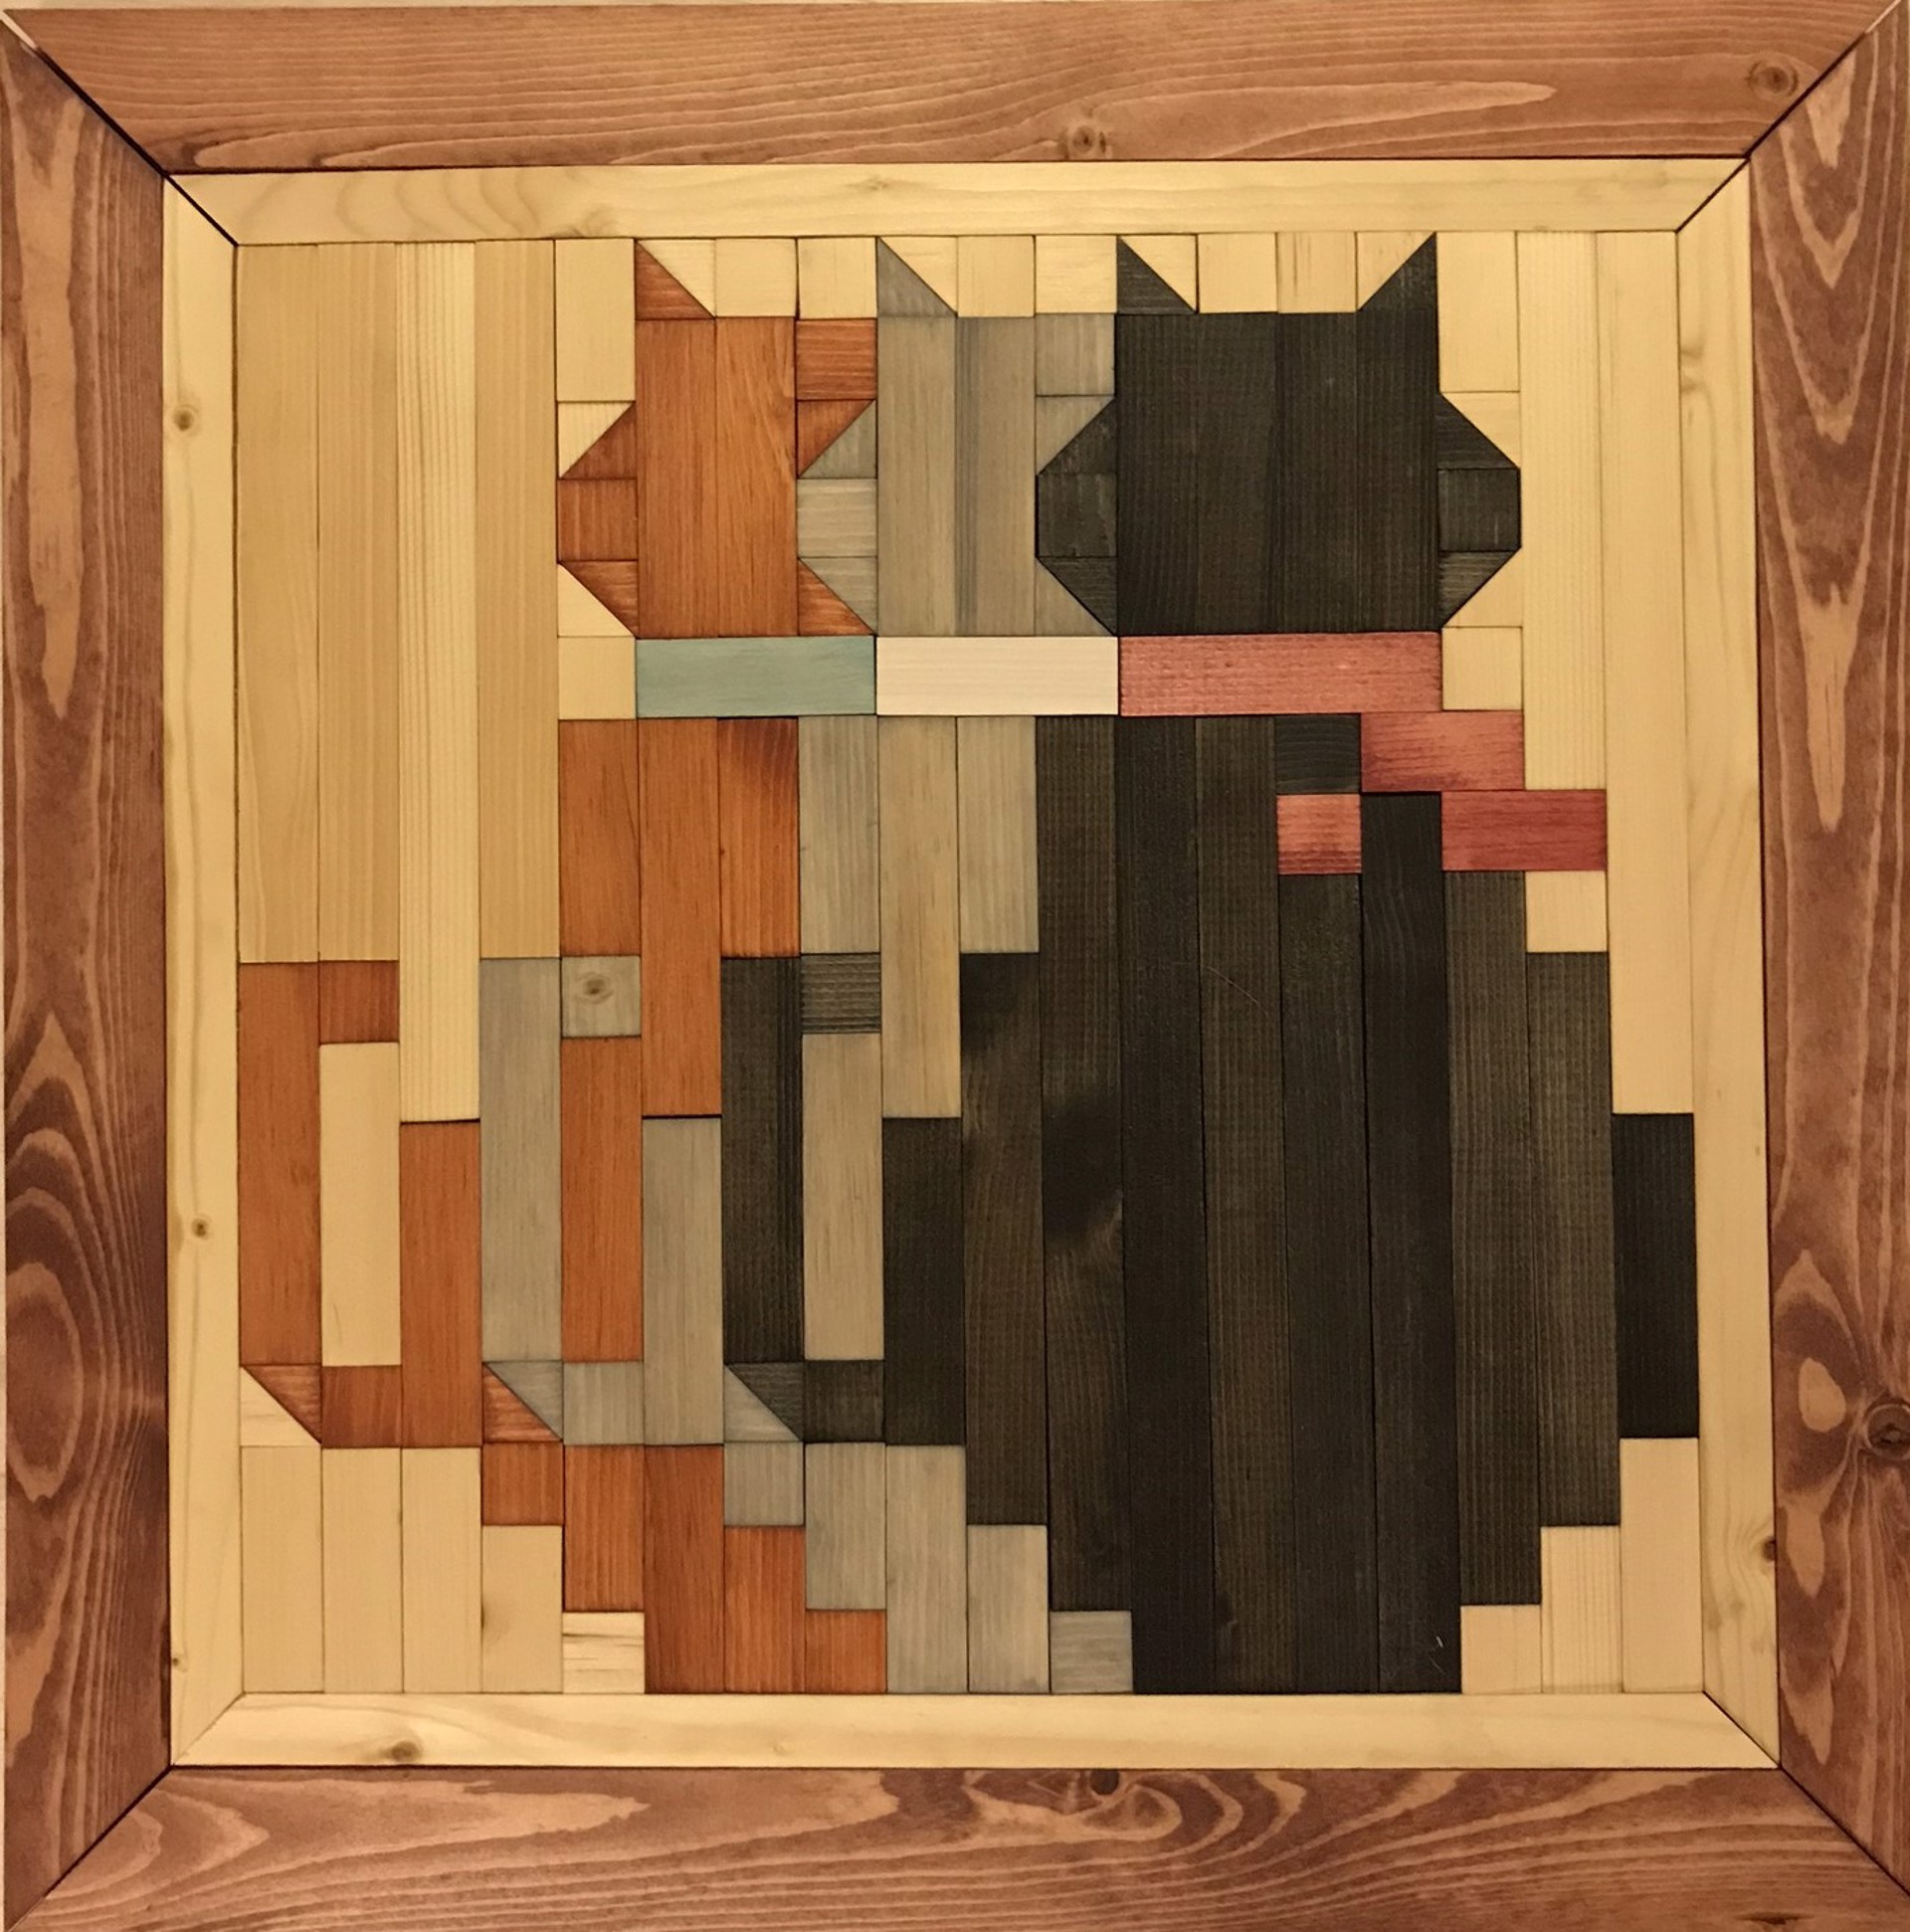 Three Darn Cats, by Gordon Stephenson by Visiting Artists